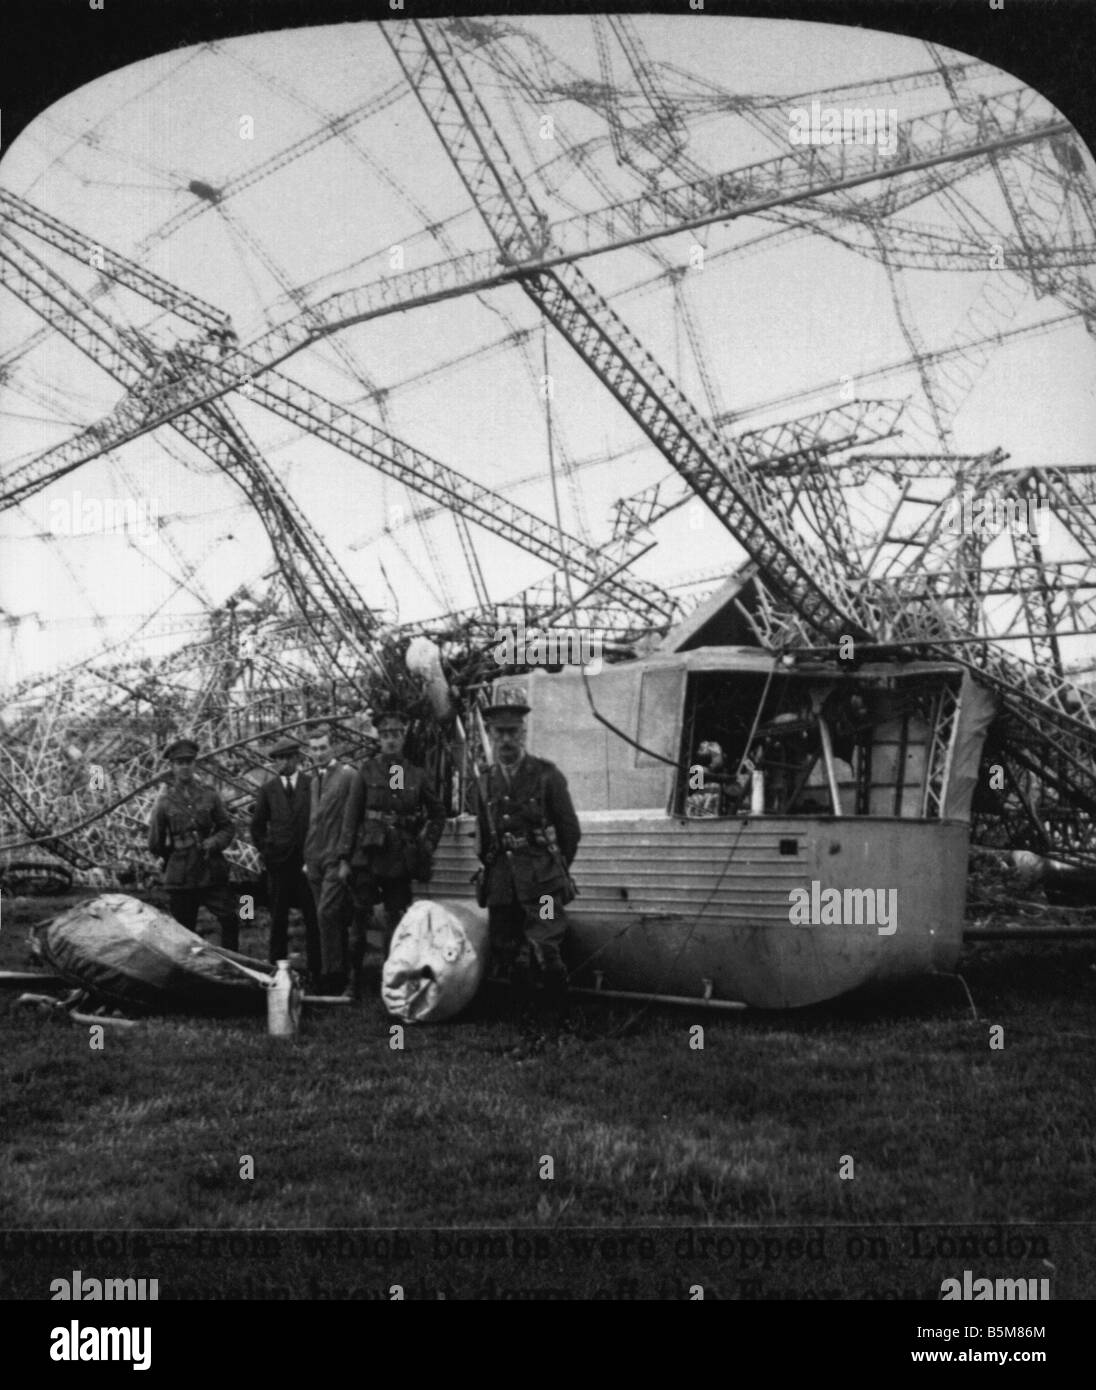 2 G55 B1 1916 5 abbattuto Ger Zeppelin Inghilterra Foto Storia Guerra Mondiale 1 guerra aerea relitto di un Tedesco Zeppelin abbattuto al Foto Stock